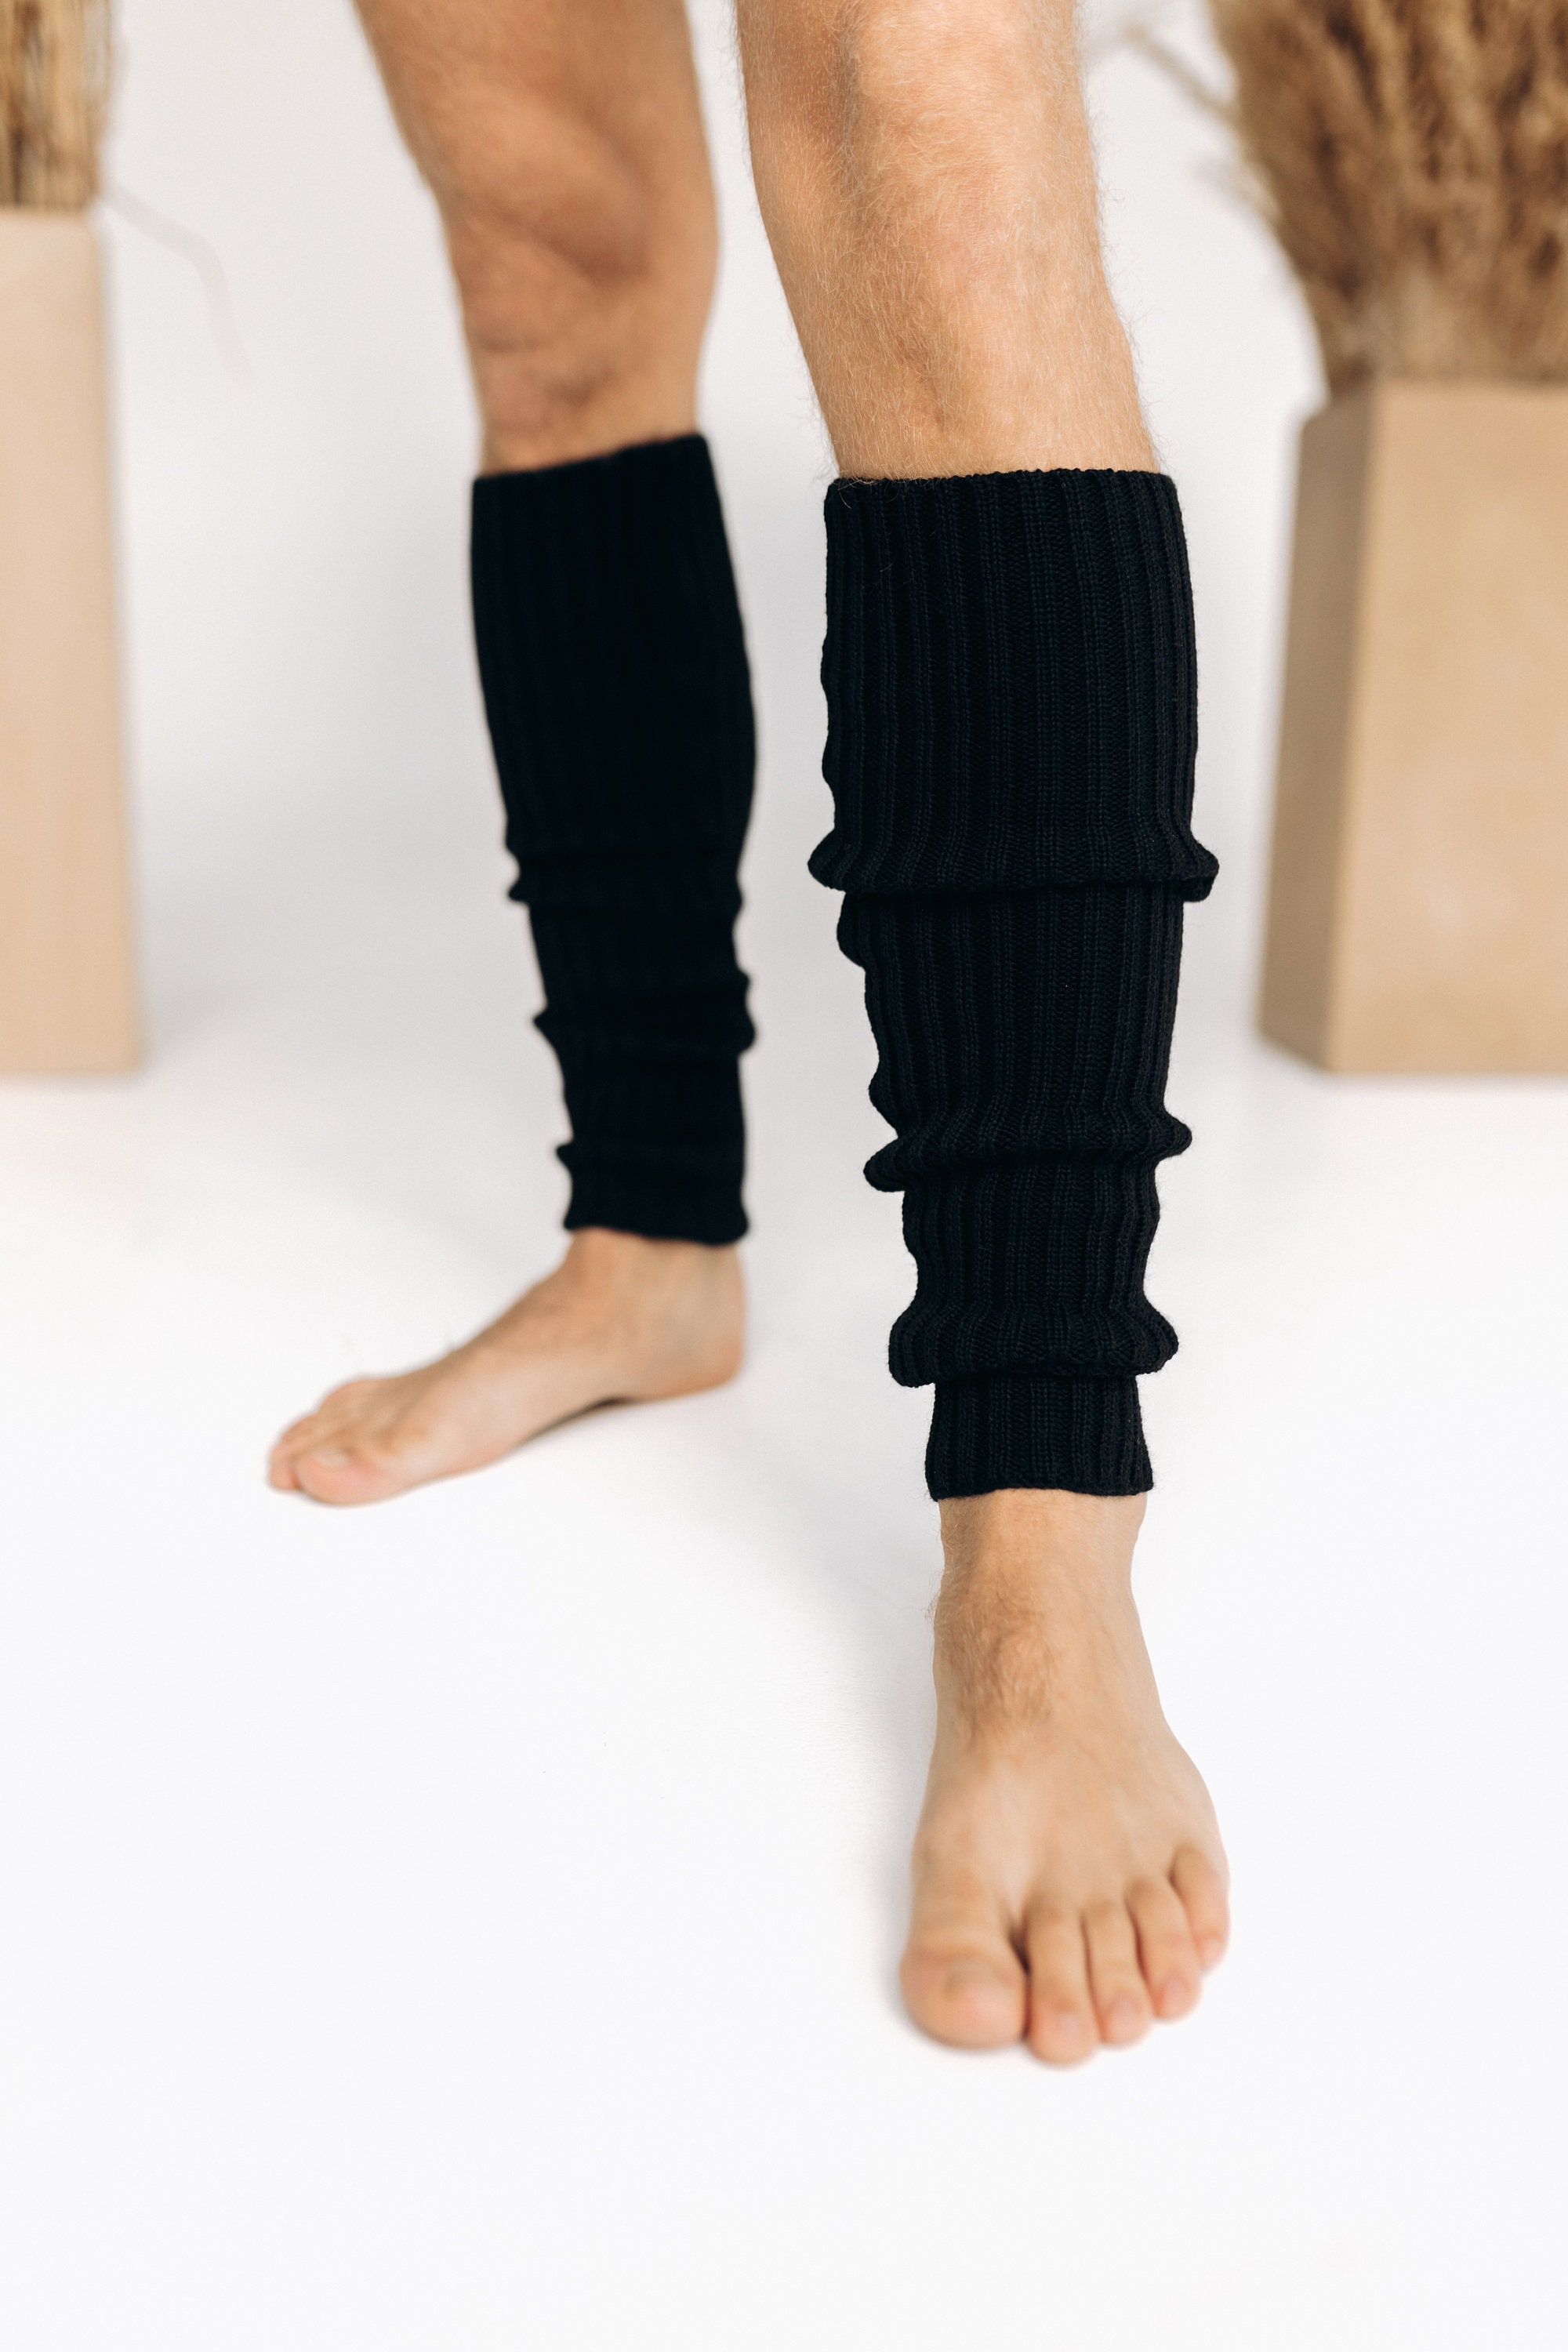 Black Soft Woolen Knit Leg Warmers, Men's Legwarmers, Knee High Men Pilates  Socks, Meditation Socks, Cosy Woolen Men's Socks, Dad Gift Idea 